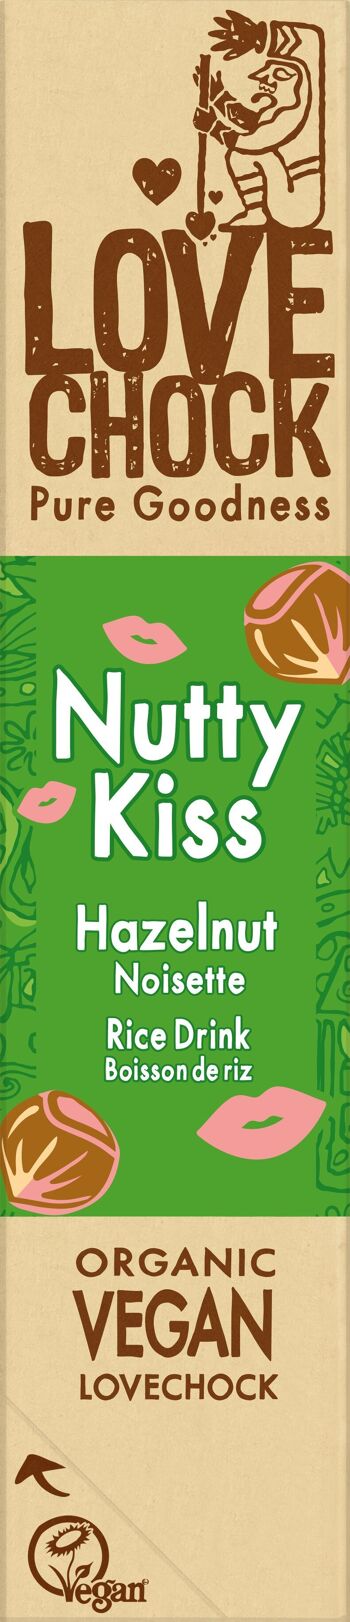 Top 12 Best Sellers! Du chocolat délicieusement végan et bio (1 Sweet Nibs - CRU , 1 99% - CRU, 1 Blueberry Hemp - CRU, 1SOUL, 1COSY, 1 SPIRIT, 1Pure Nibs - CRU, 1 Extra Pure - CRU, 1 Almond Fig - CRU, 1 WARM HUG, 1 LOVE, 1 NUTTY KISS) 12